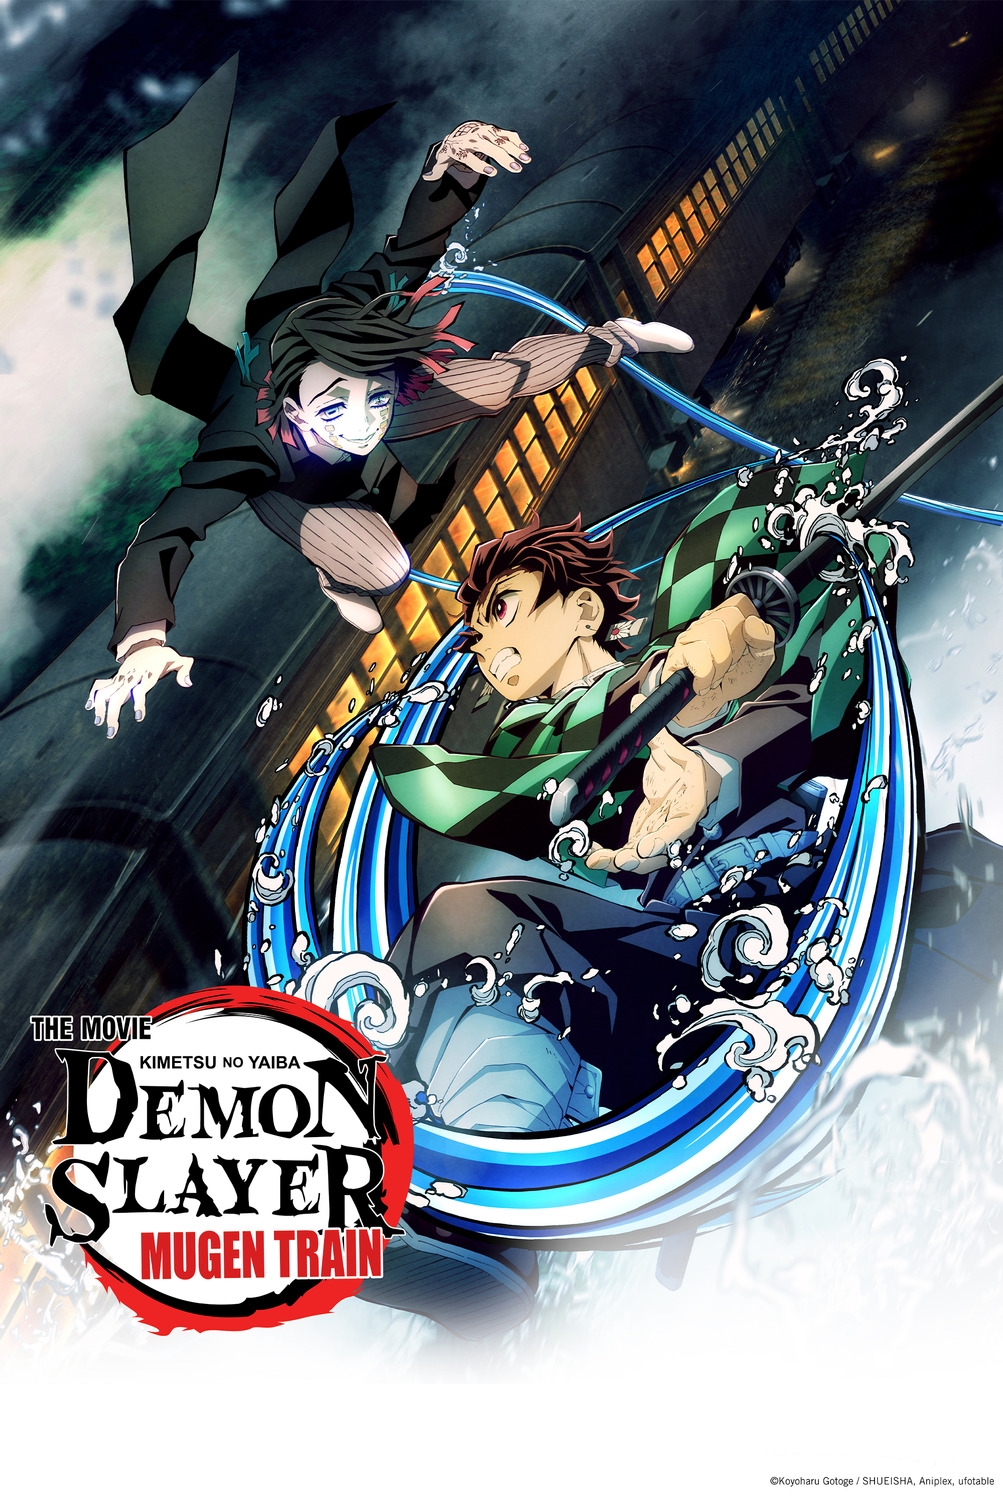 Crunchyroll Announces New Demon Slayer Cinema Experience Dates